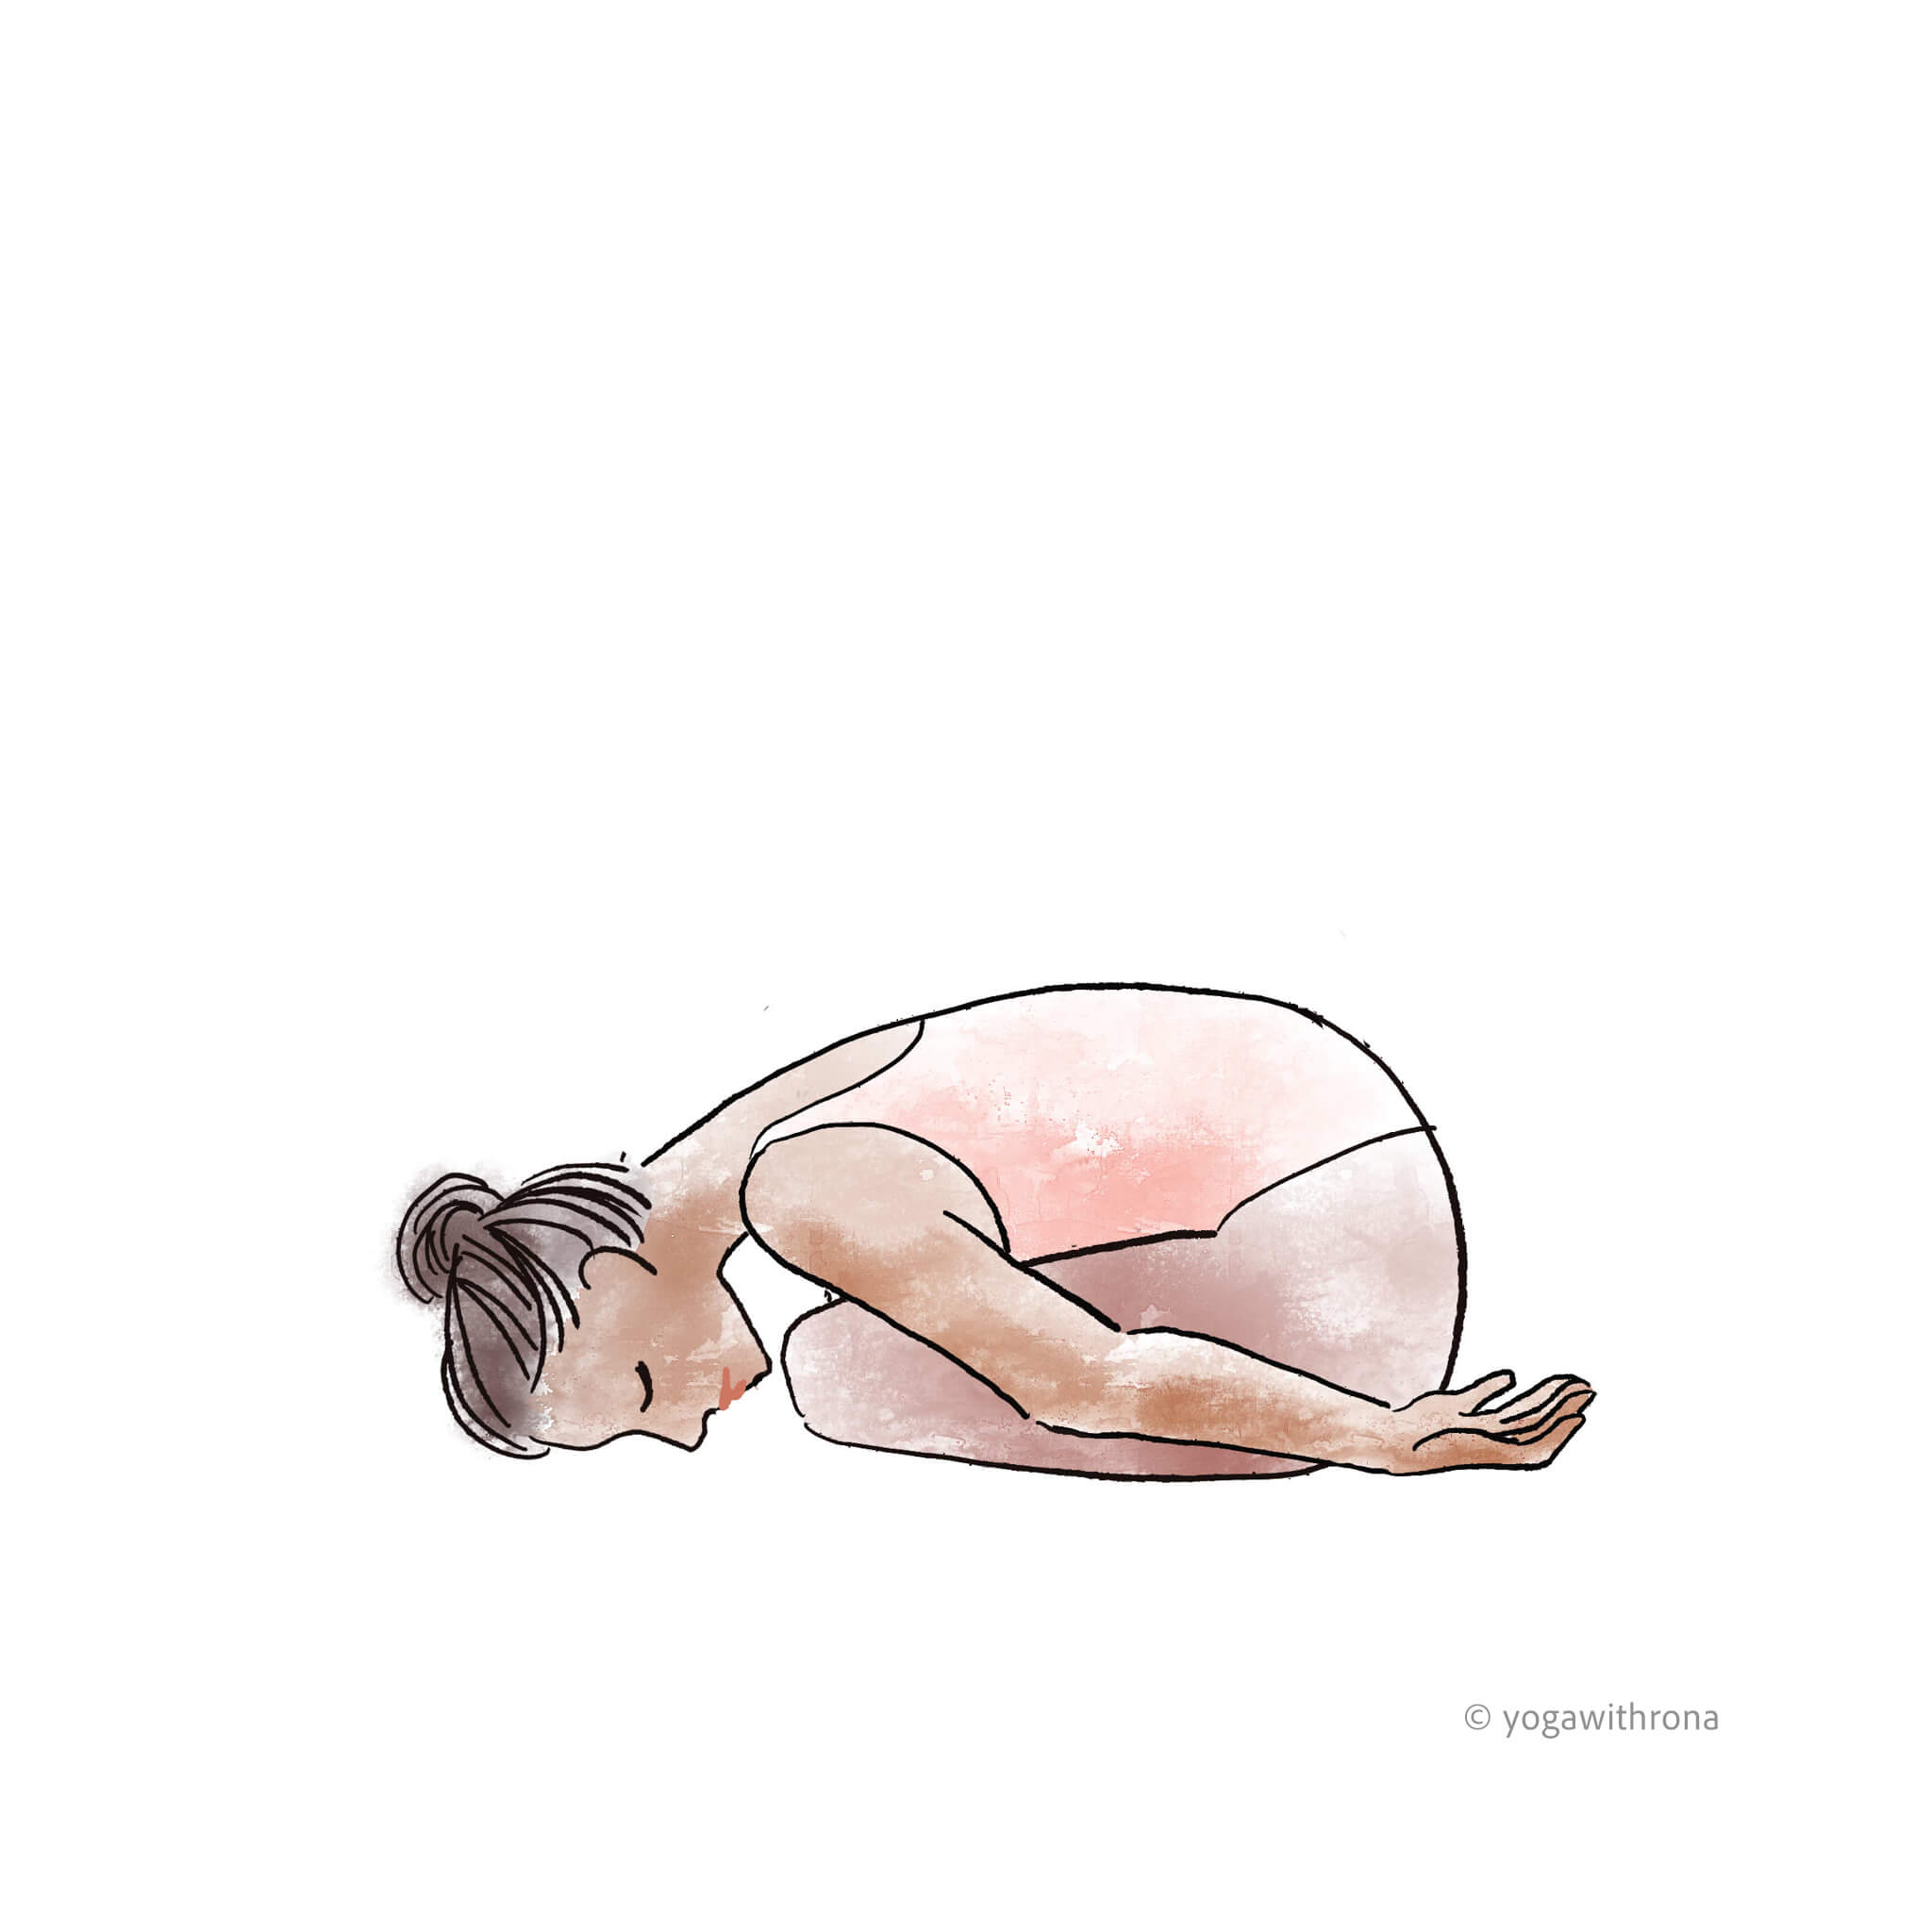 Corpse Pose (Savasana) - Yoga by D